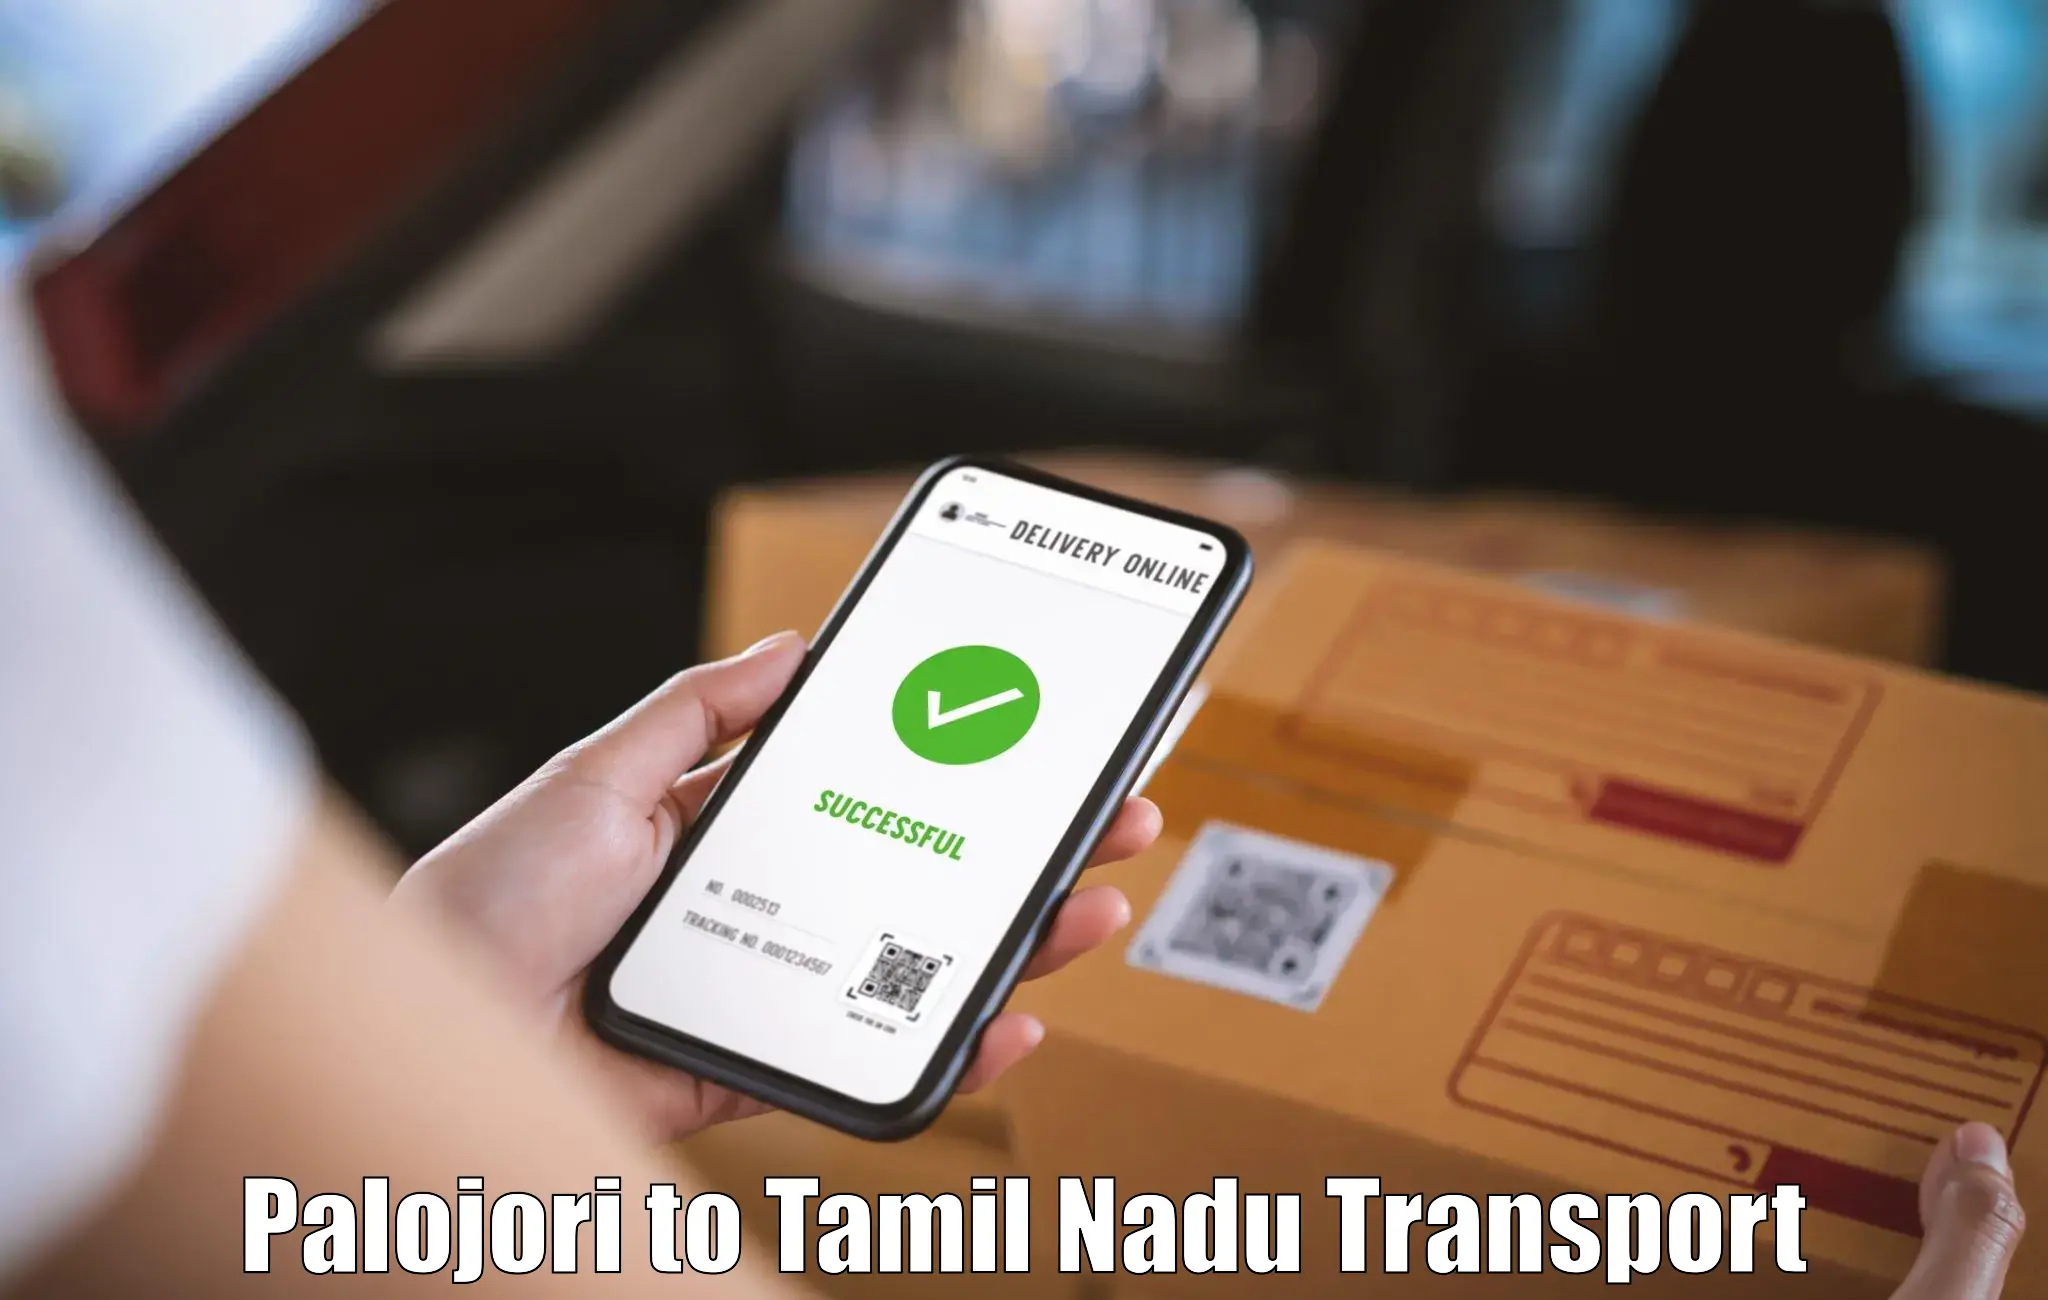 Transport shared services Palojori to Tiruvannamalai